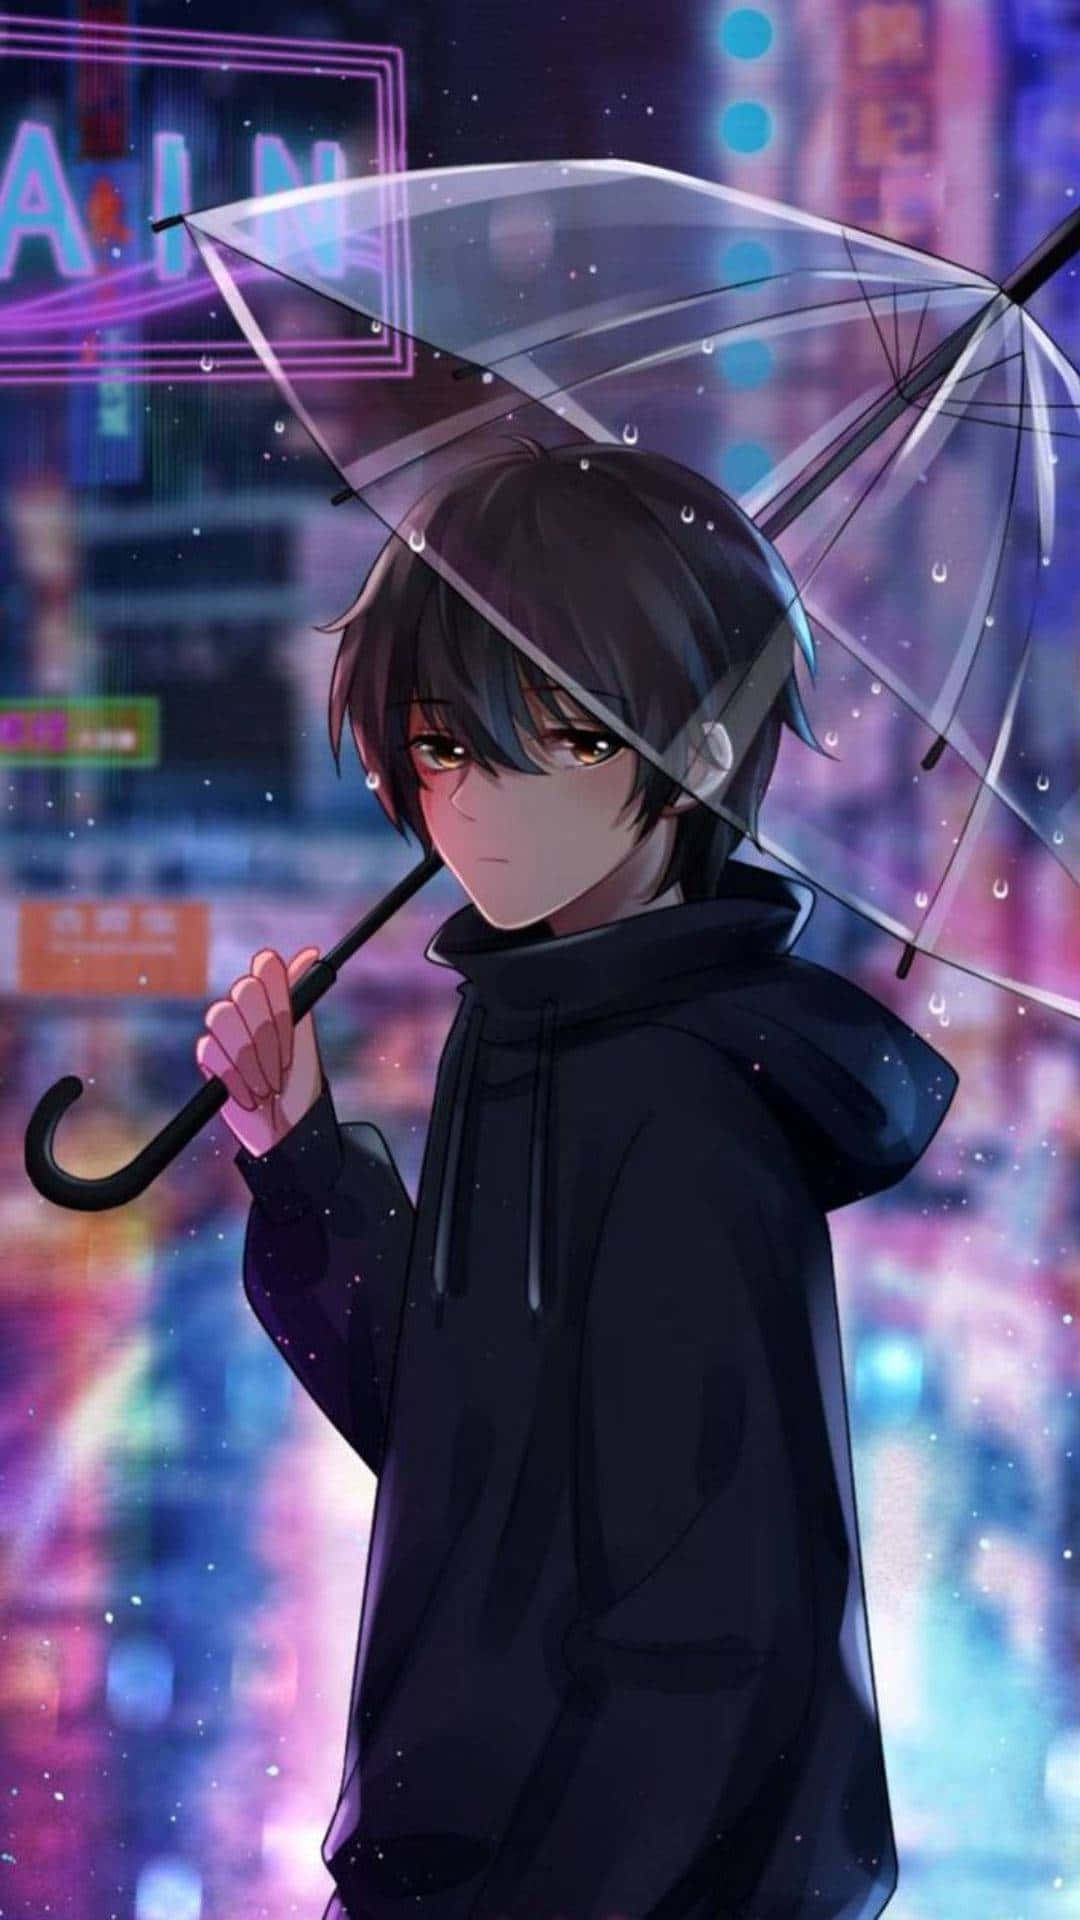 Download Young Dark Anime Boy Looking Upward Wallpaper